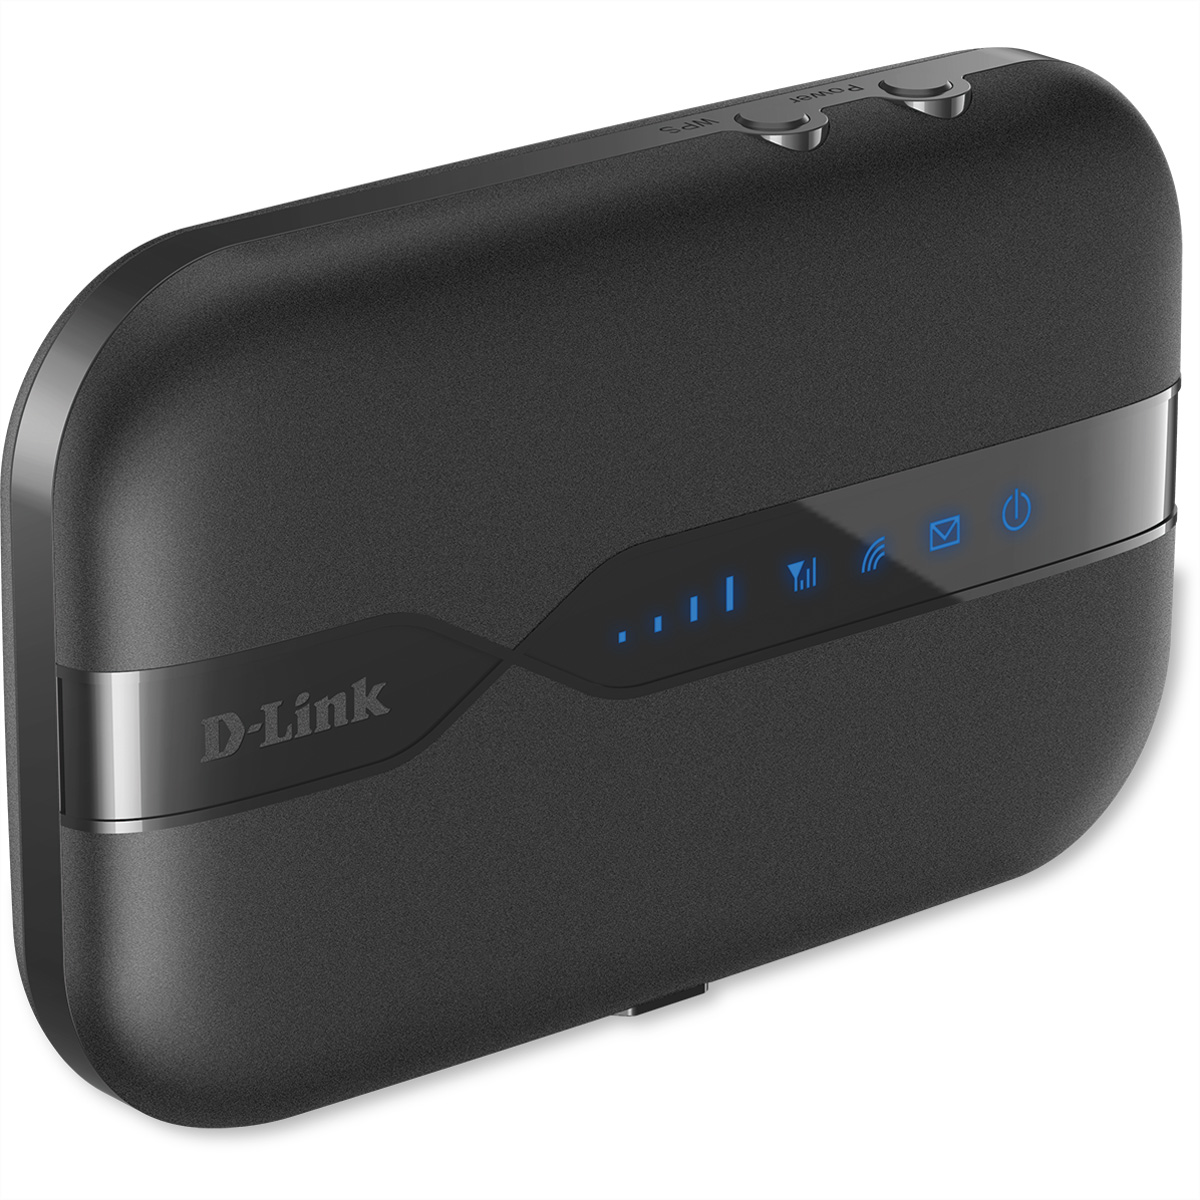 D-Link DWR-932 4G LTE Mobile WiFi Hotspot, 150Mbps